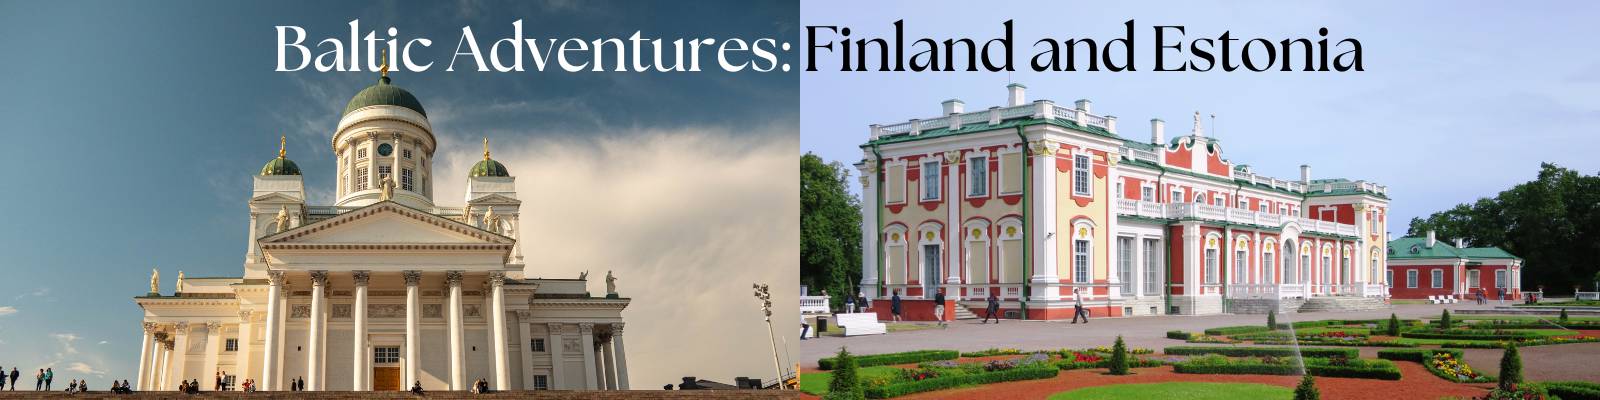 Baltic Adventures: Finland and Estonia